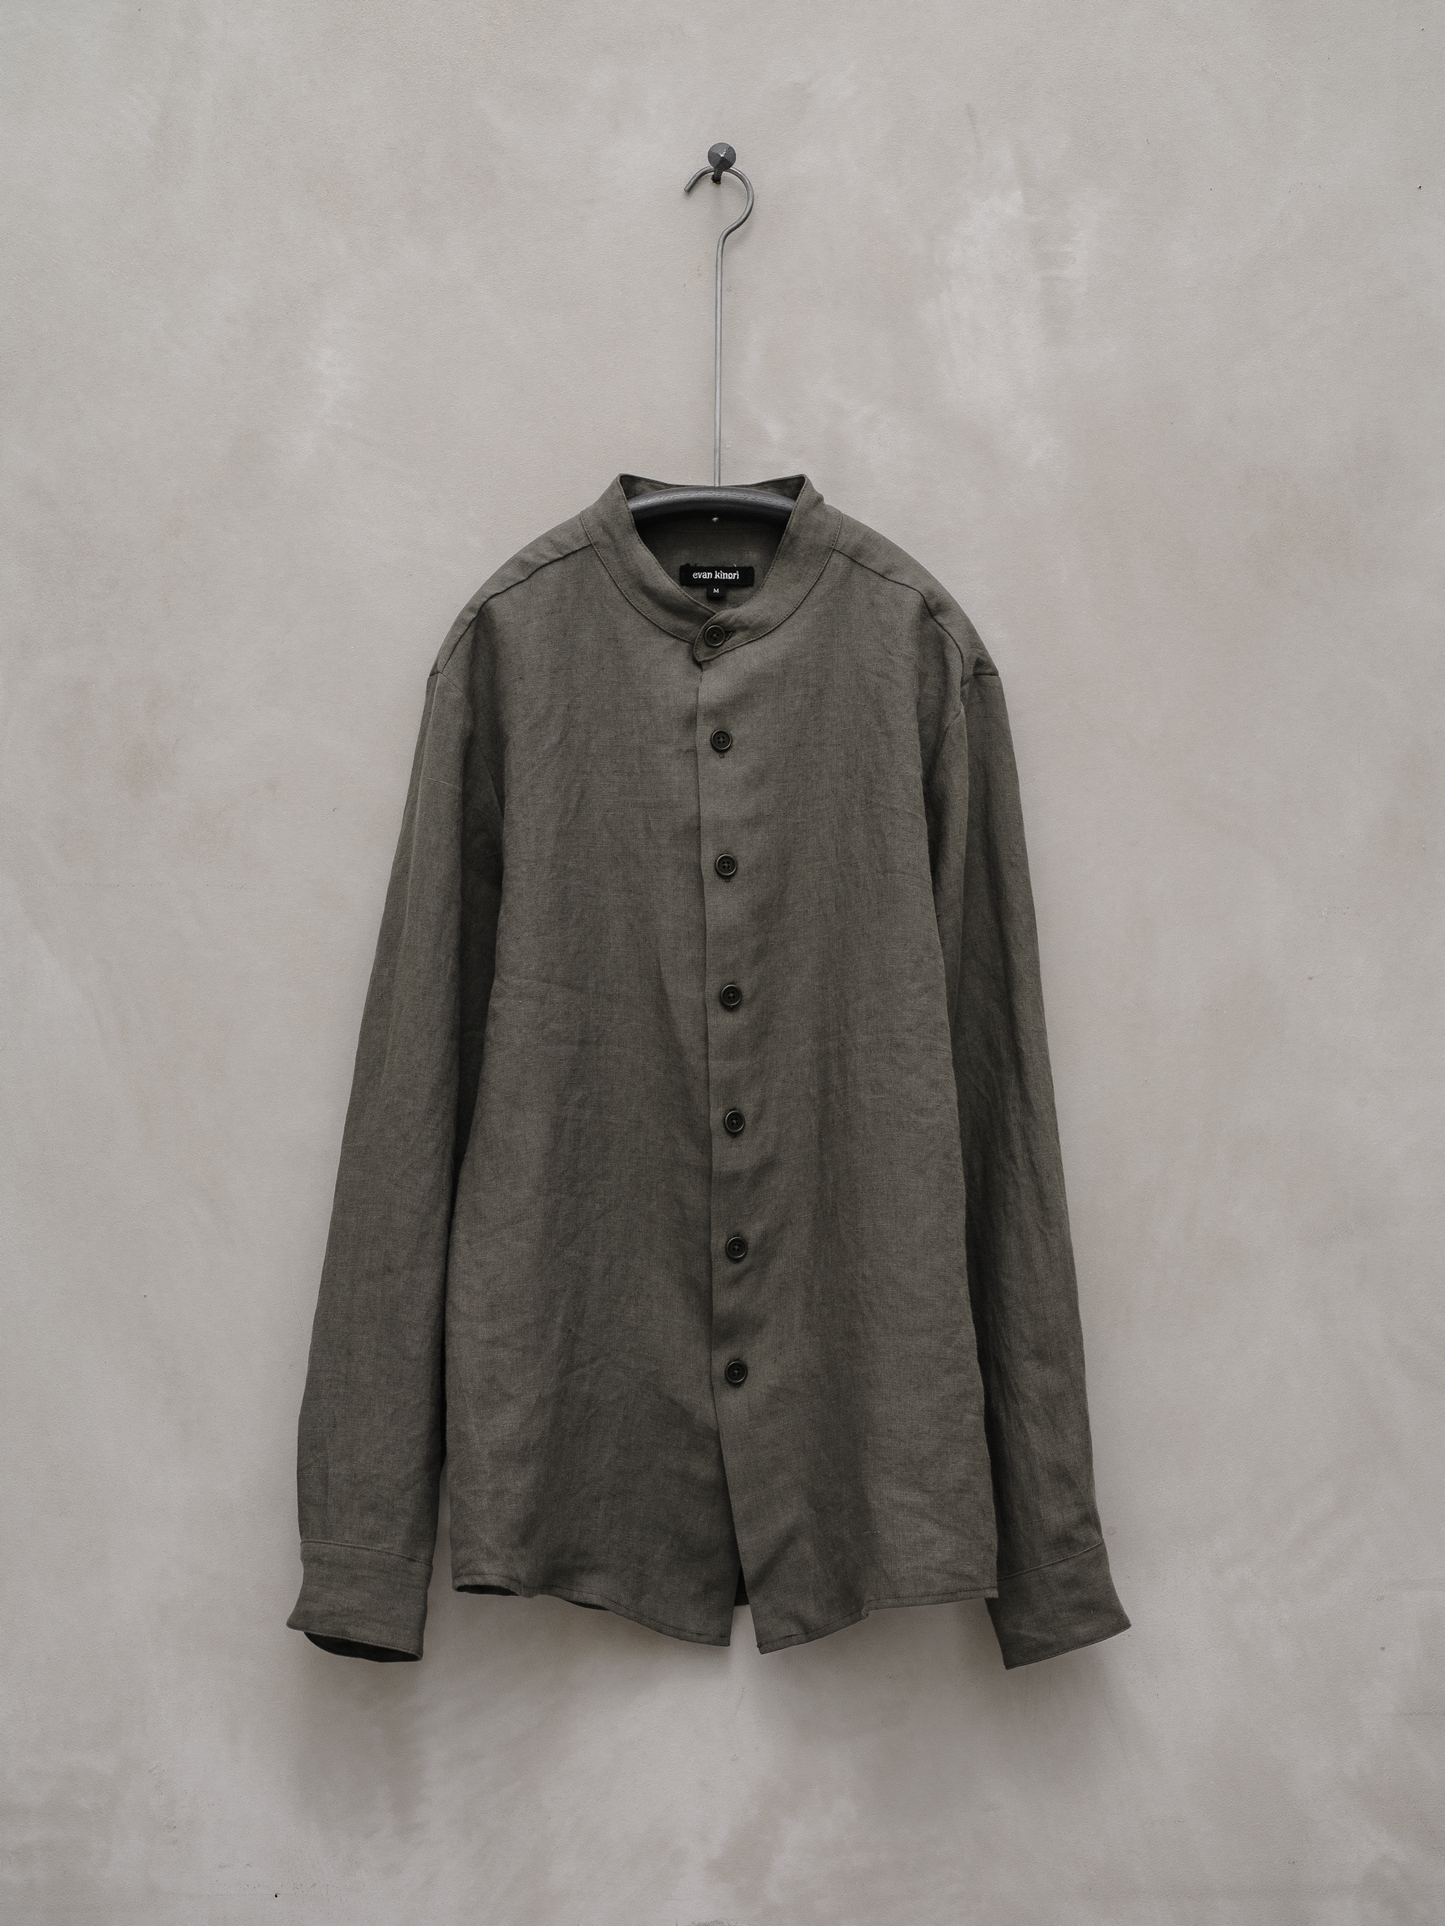 Band Collar Shirt - Tumbled Linen, Olive